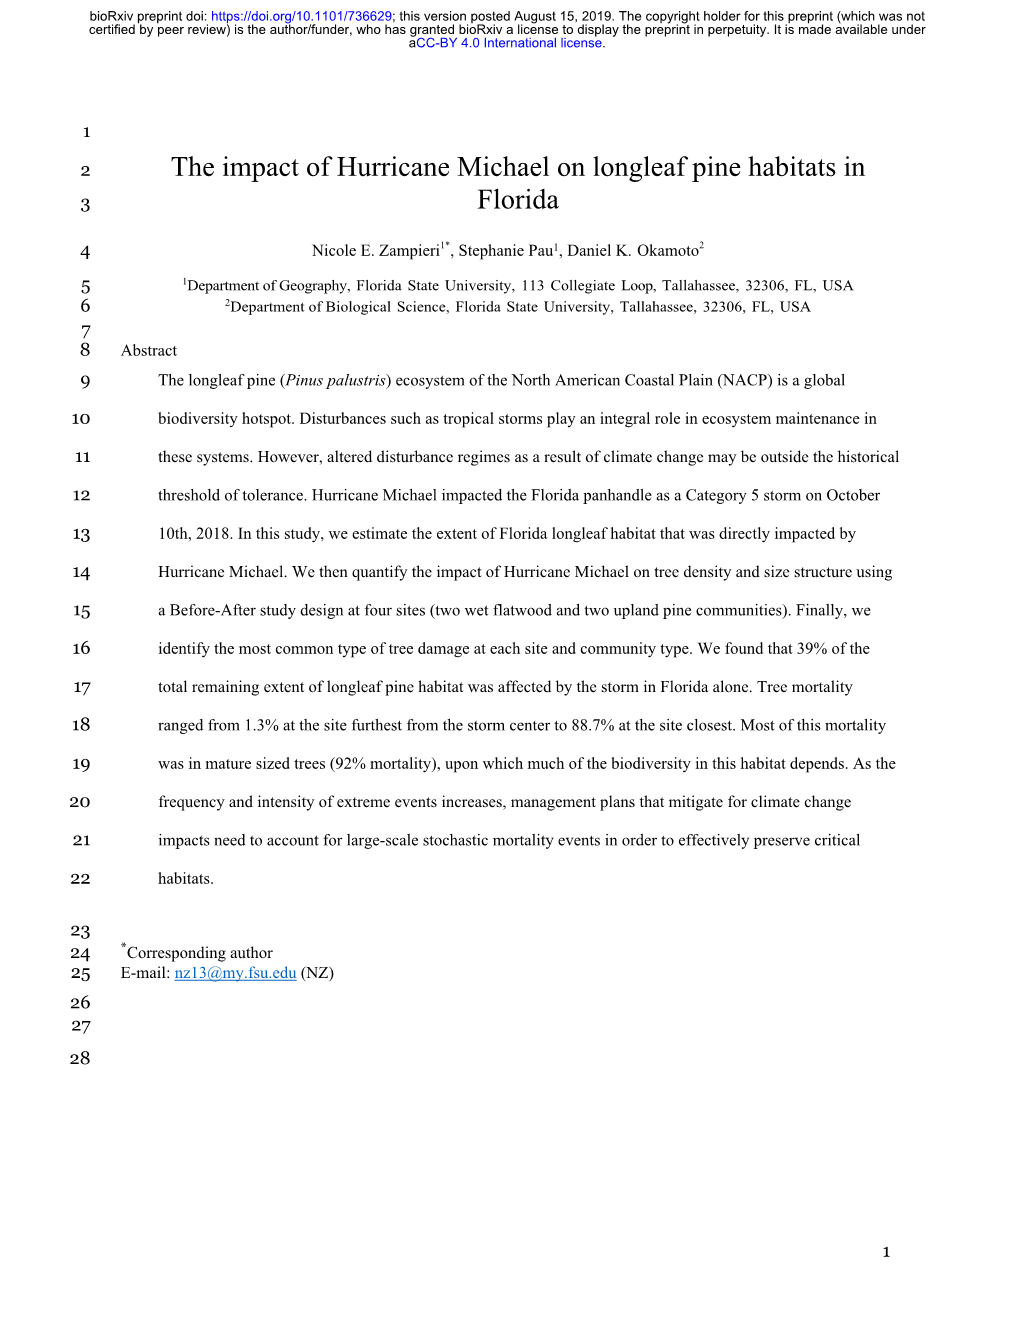 The Impact of Hurricane Michael on Longleaf Pine Habitats in Florida